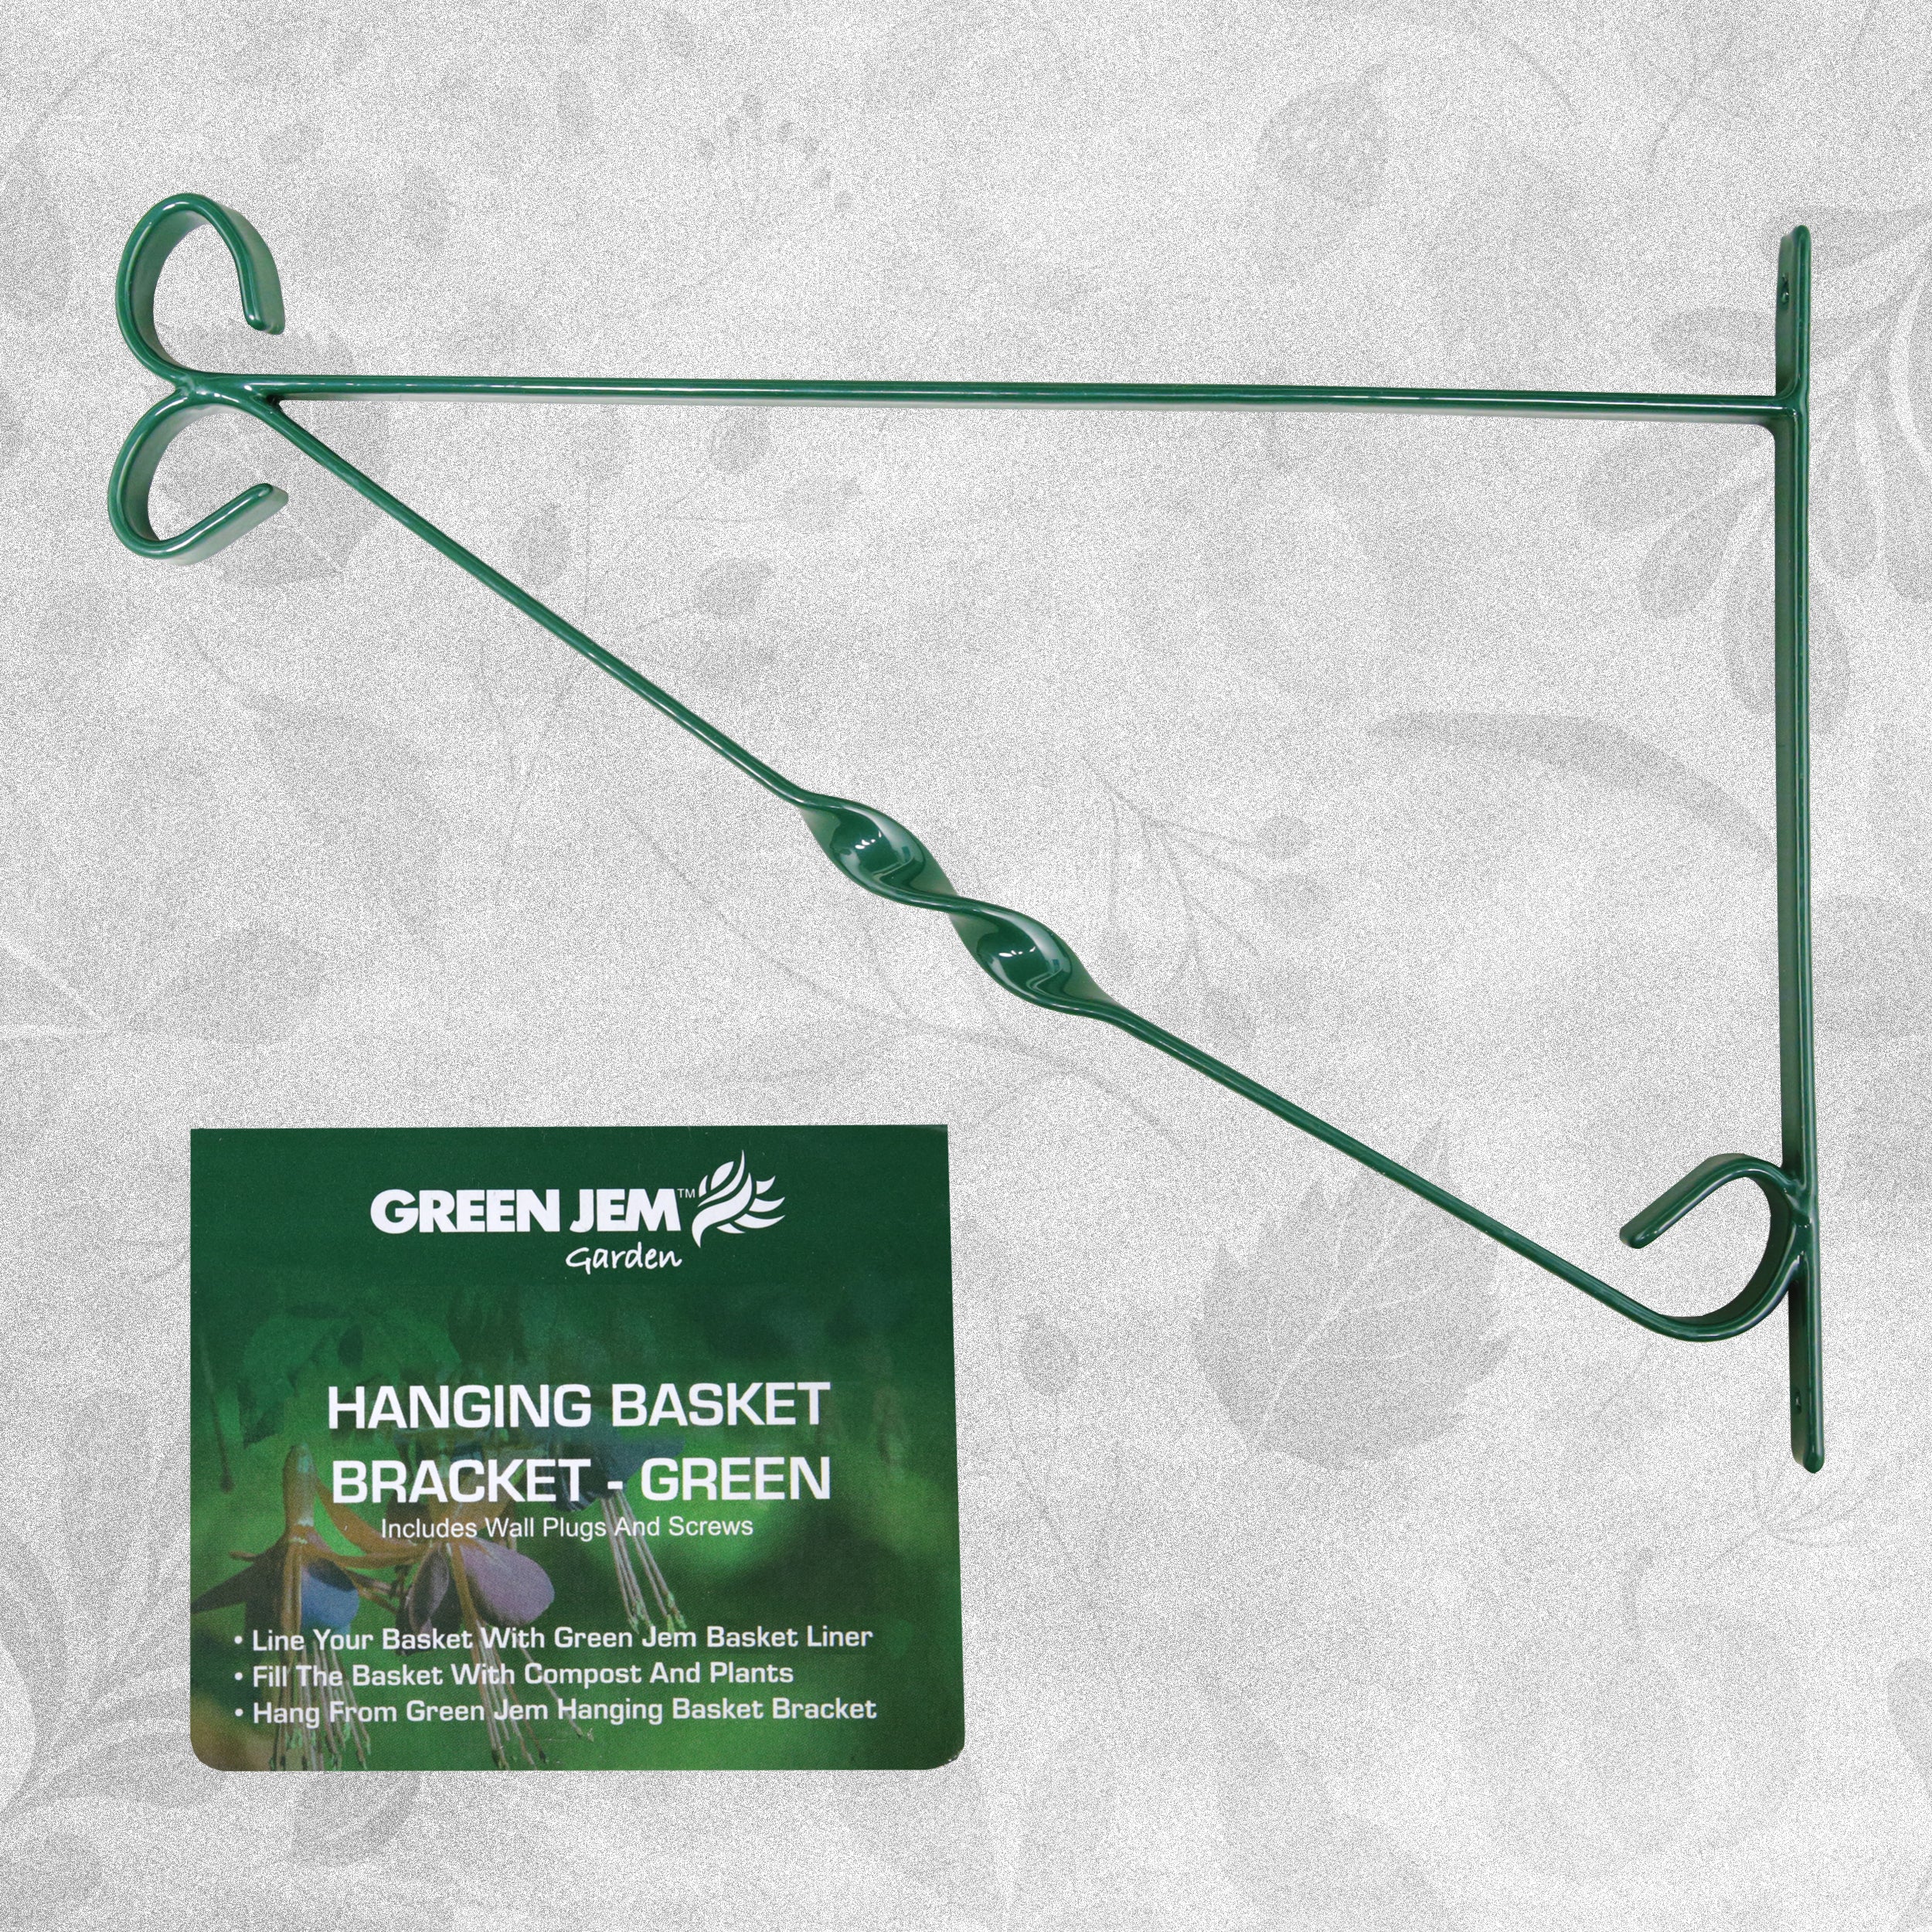 Green Jem Garden Wall Hanging Basket Bracket - Green - 36 cm (14")